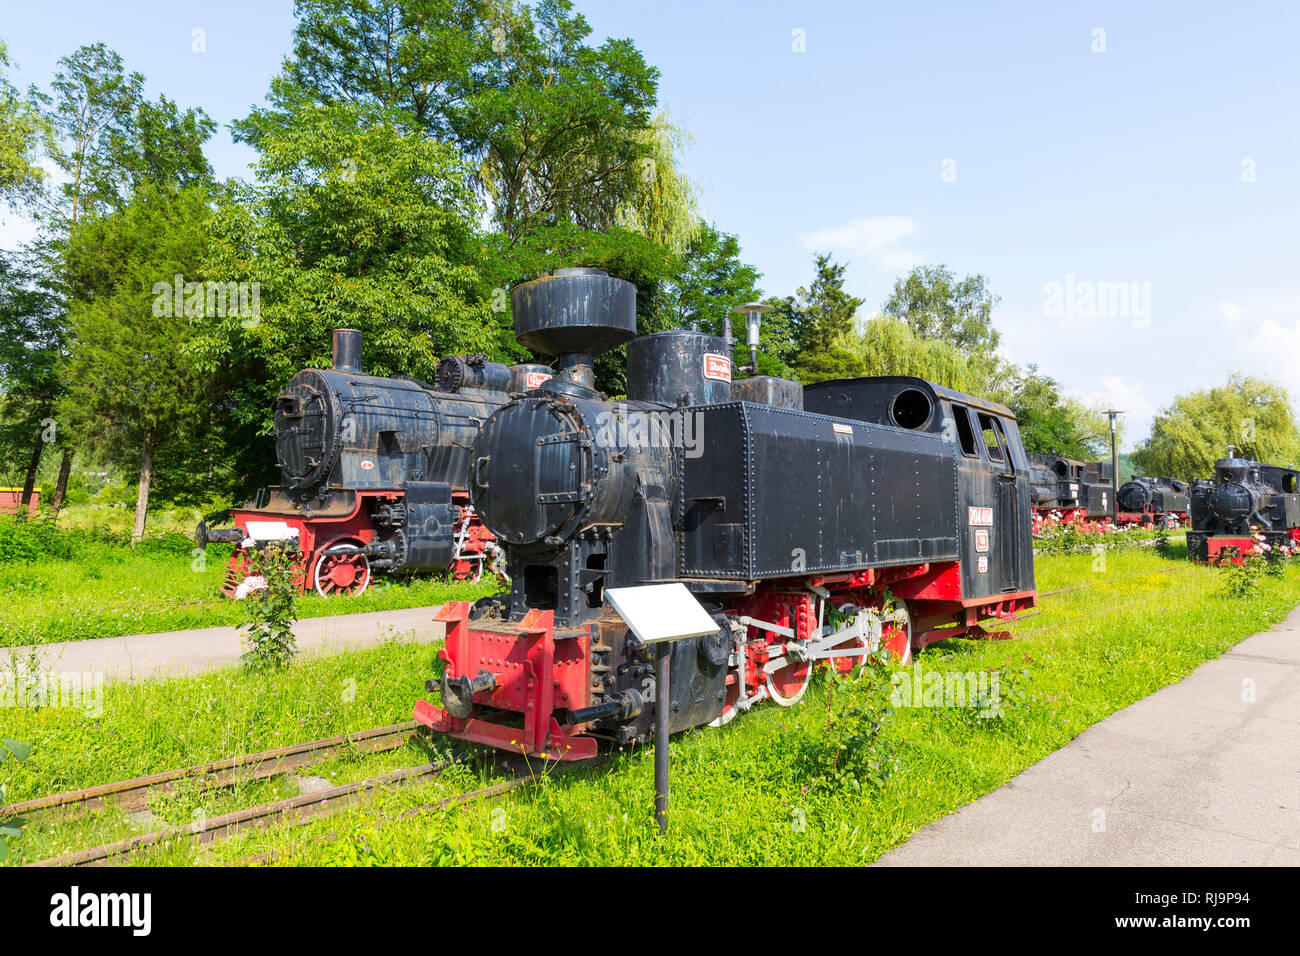 Freilicht-Dampflokmuseum, Dampflokomotiven Ausstellung, Reschitz, Re?i?a, Cara?-Severin, Banat, Rumänien, Romania Stock Photo